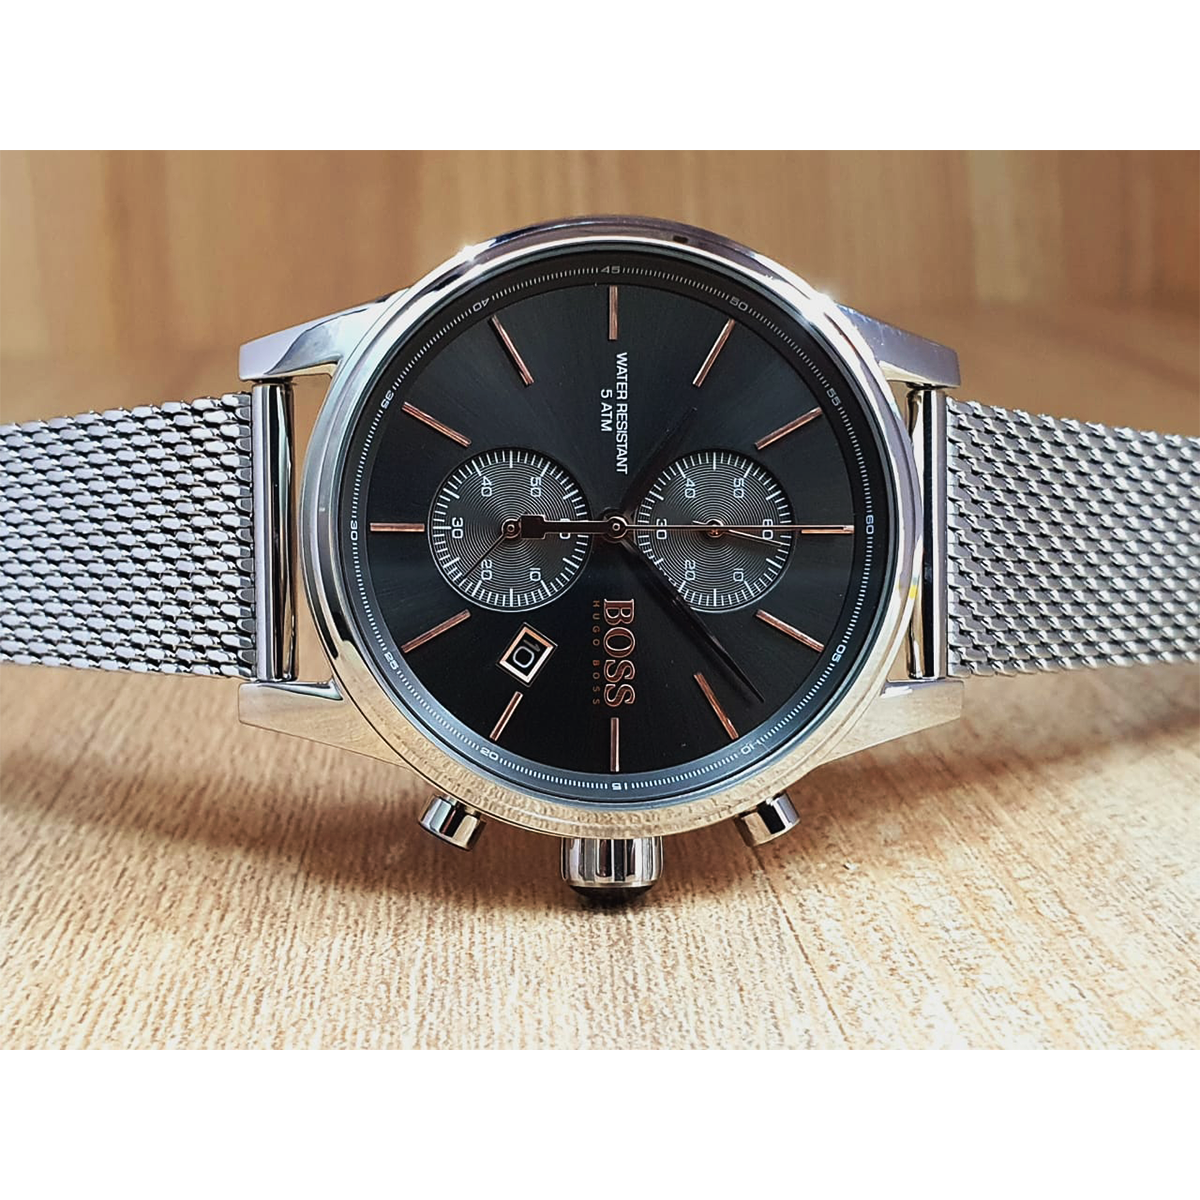 Boss Men’s Quartz Silver Stainless Steel black Dial Watch